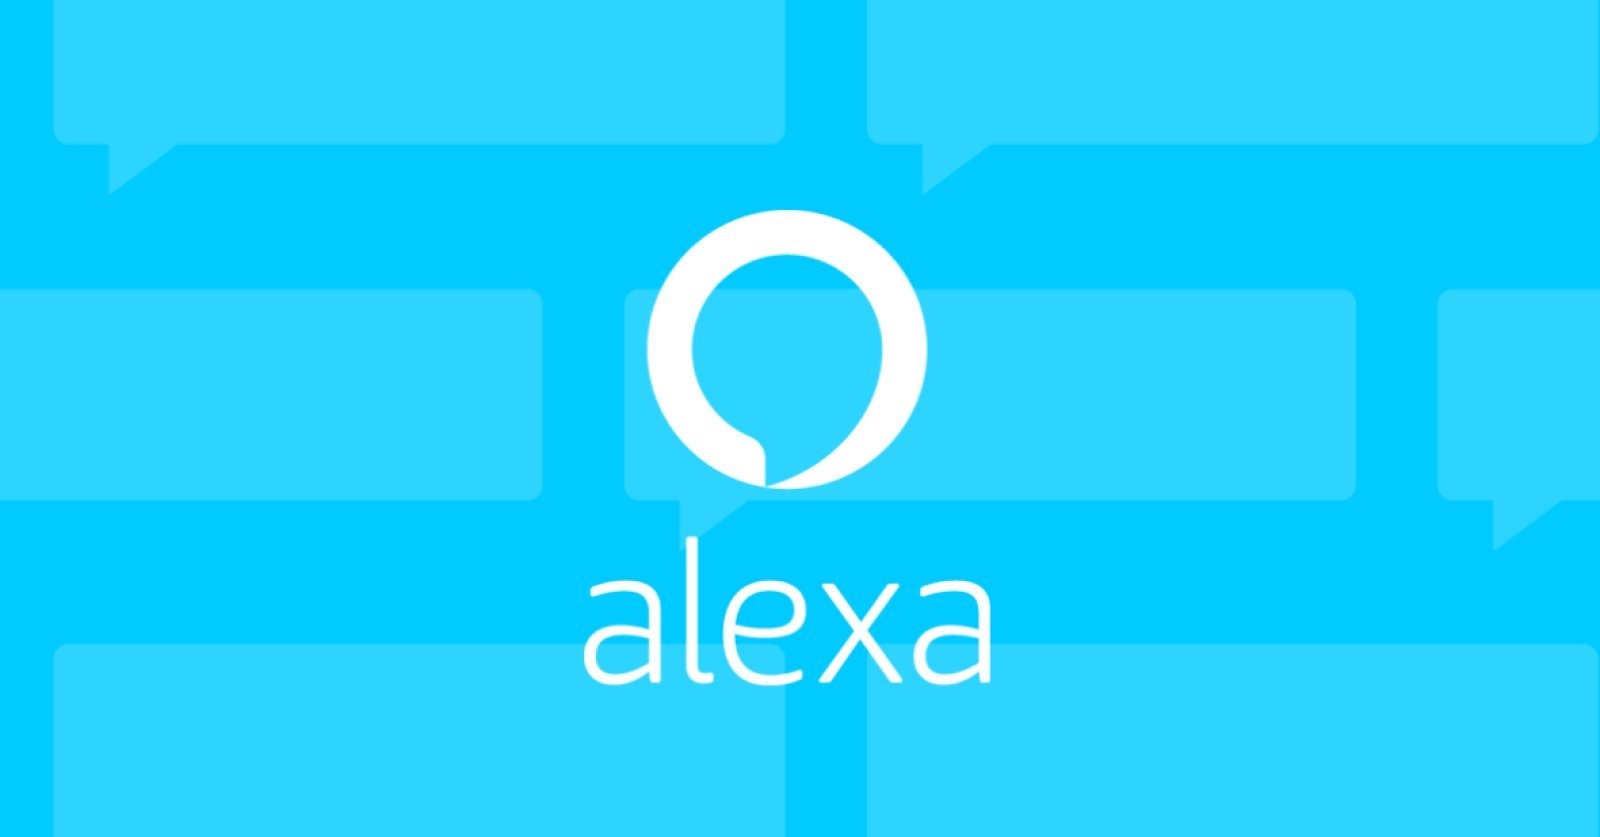 download alexa app for windows 10 pc free